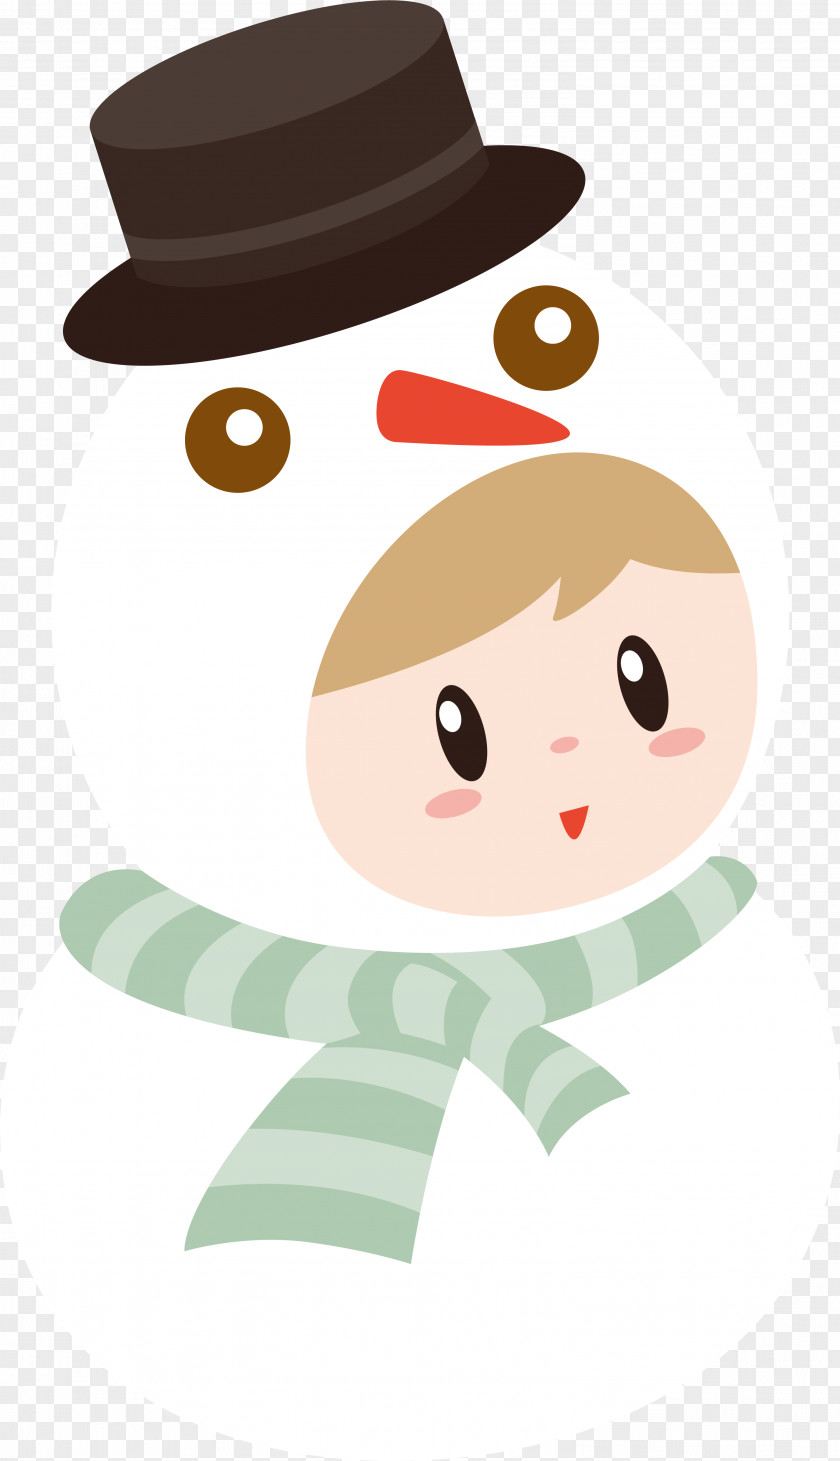 White Snowman Christmas CorelDRAW PNG